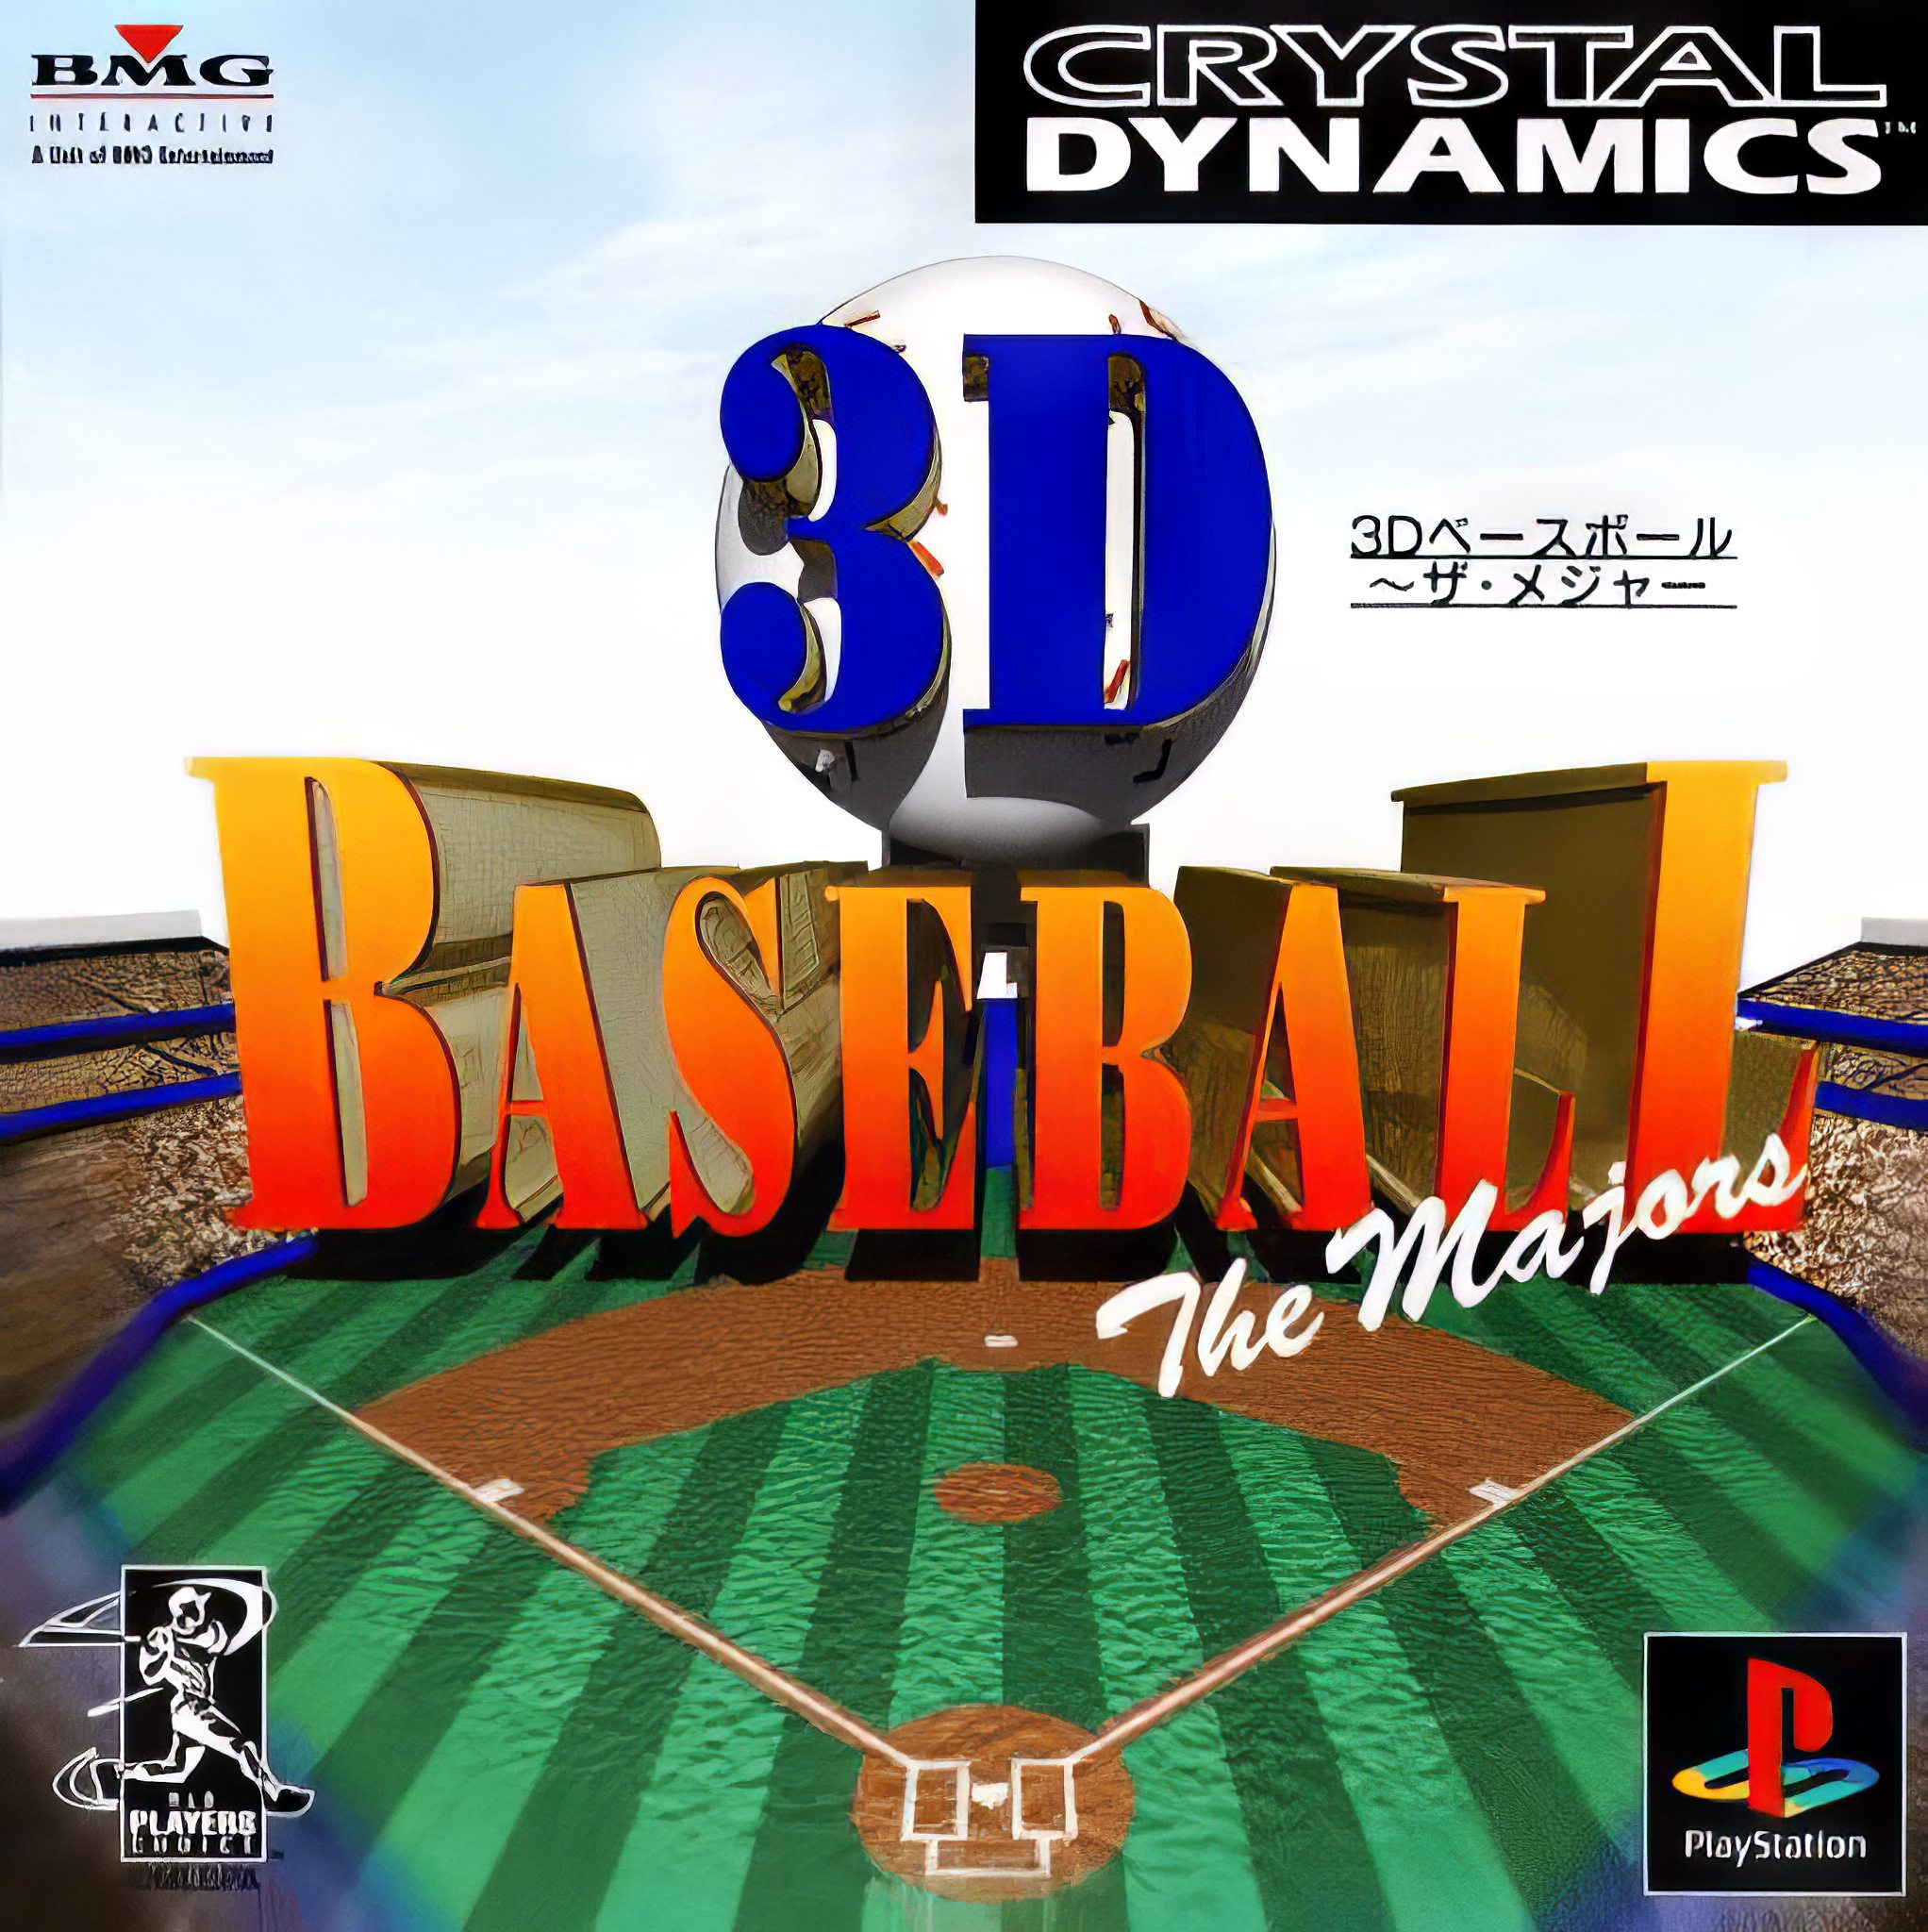 3D Baseball: A PlayStation Classic